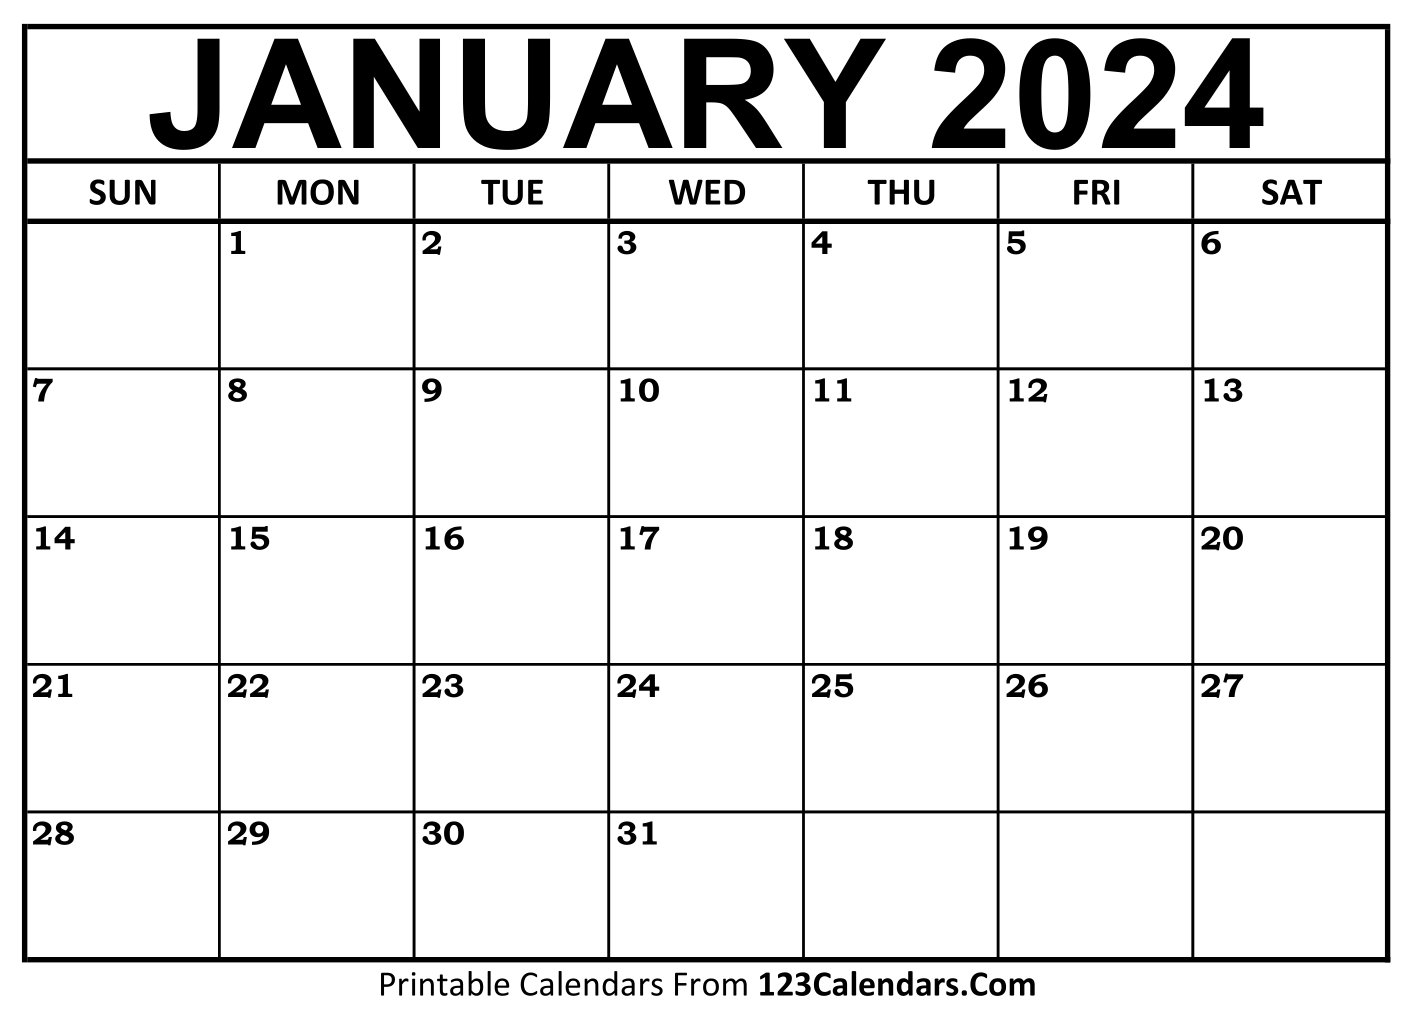 Printable January 2024 Calendar Templates - 123Calendars for Printable Calendar 2024 January